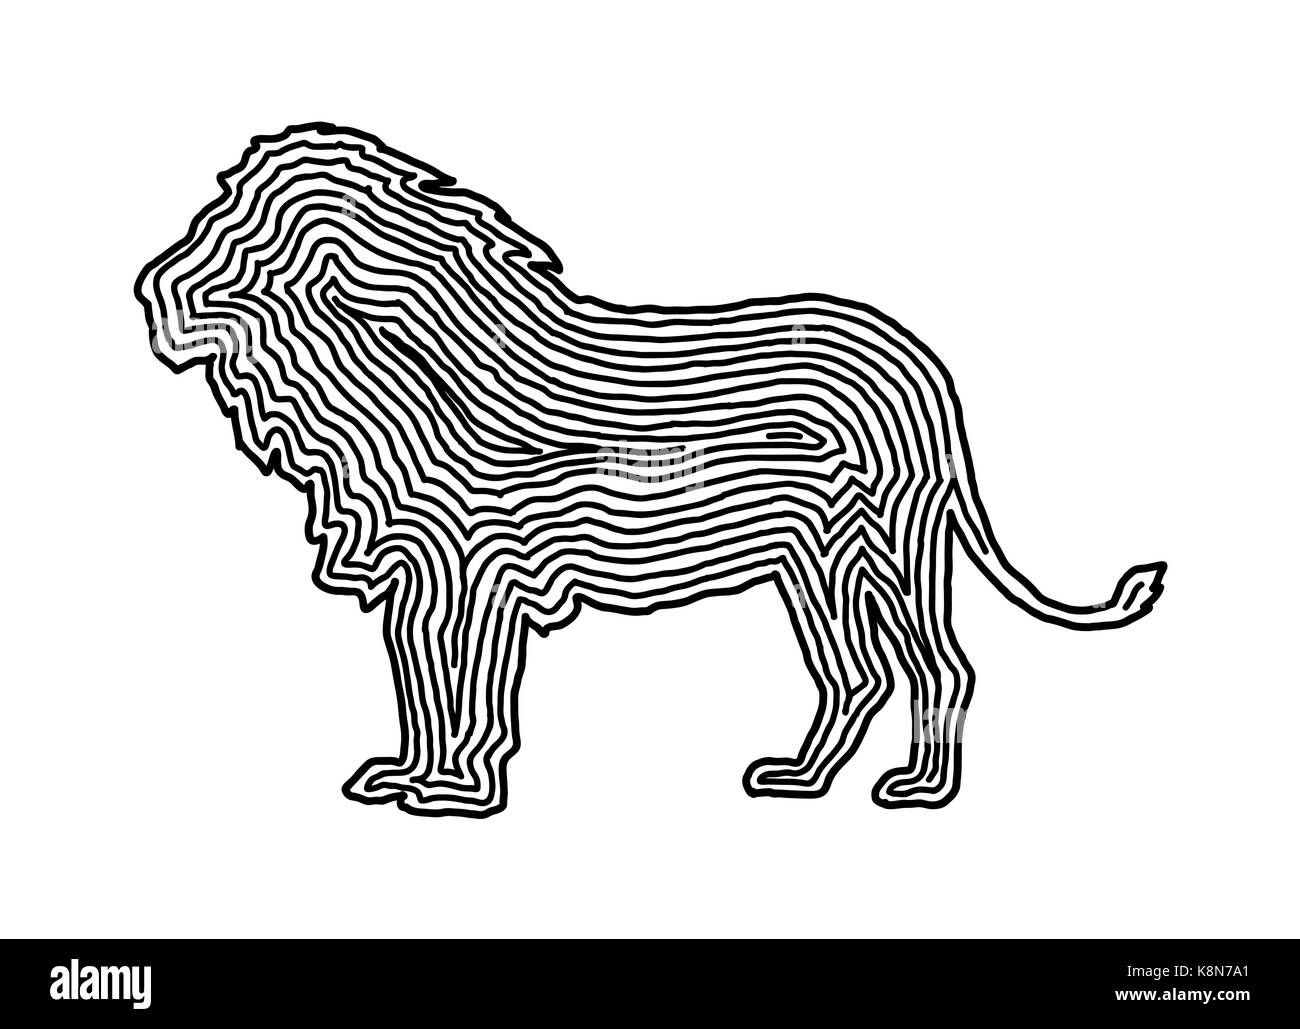 A lion illustration icon in black offset line. Fingerprint style for logo or background design. Stock Vector